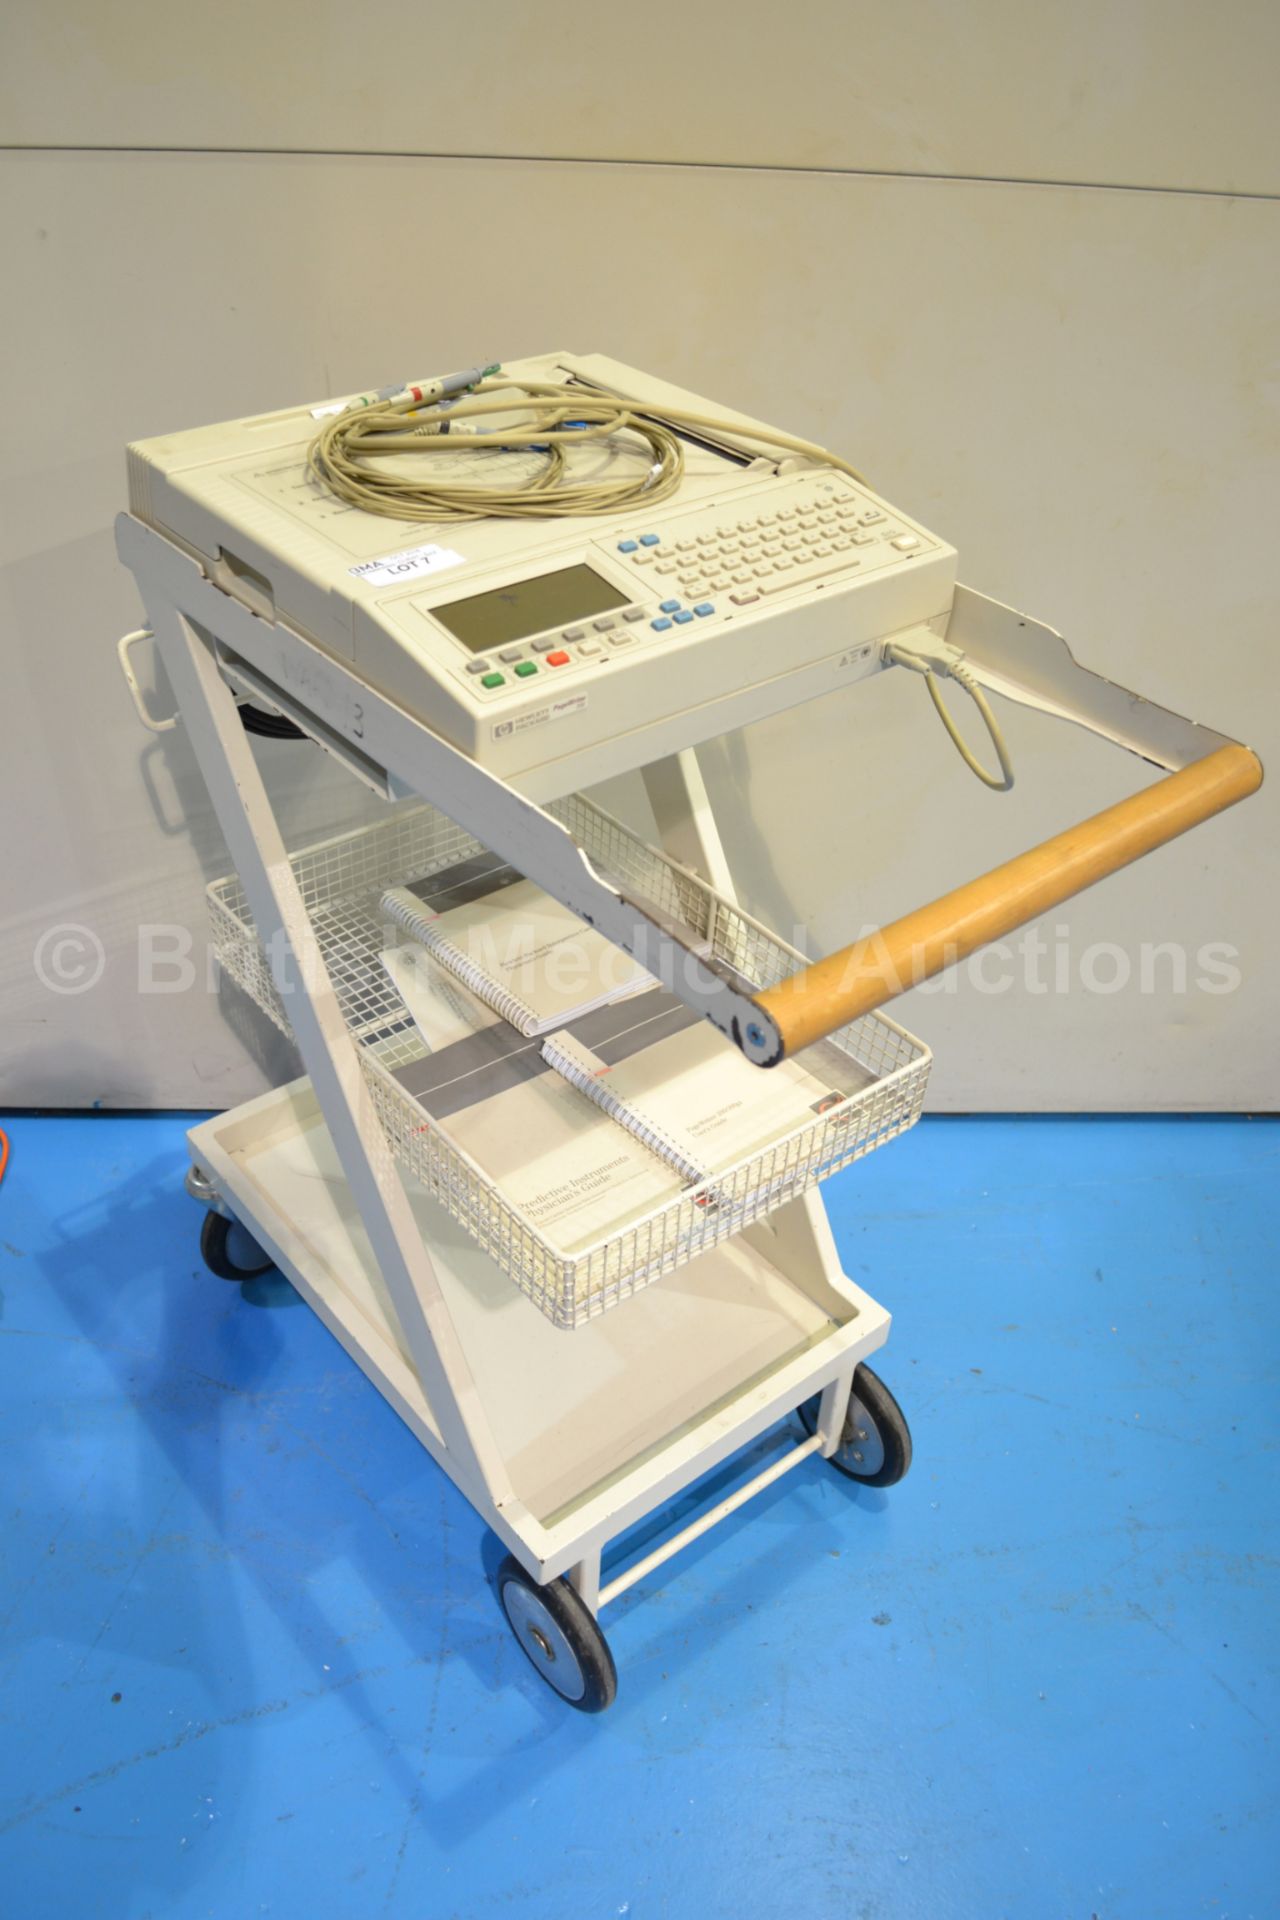 Hewlett Packard Pagewriter 200 ECG Machine with EC - Image 2 of 3